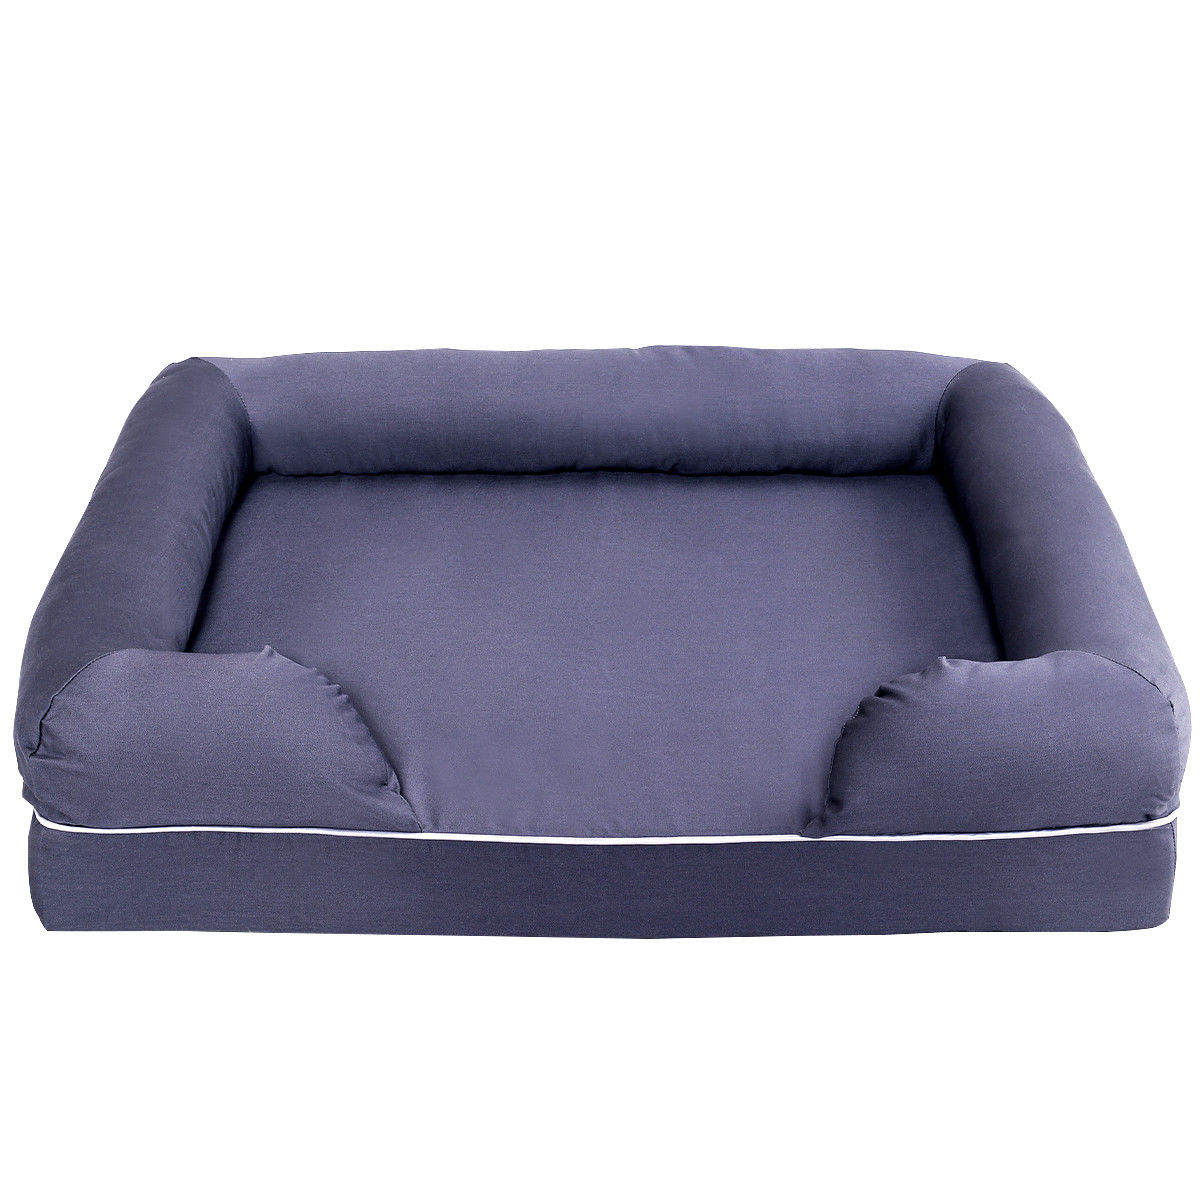 Small Dog Sofa Pet Bed Solid Memory Foam Comfortable Gray